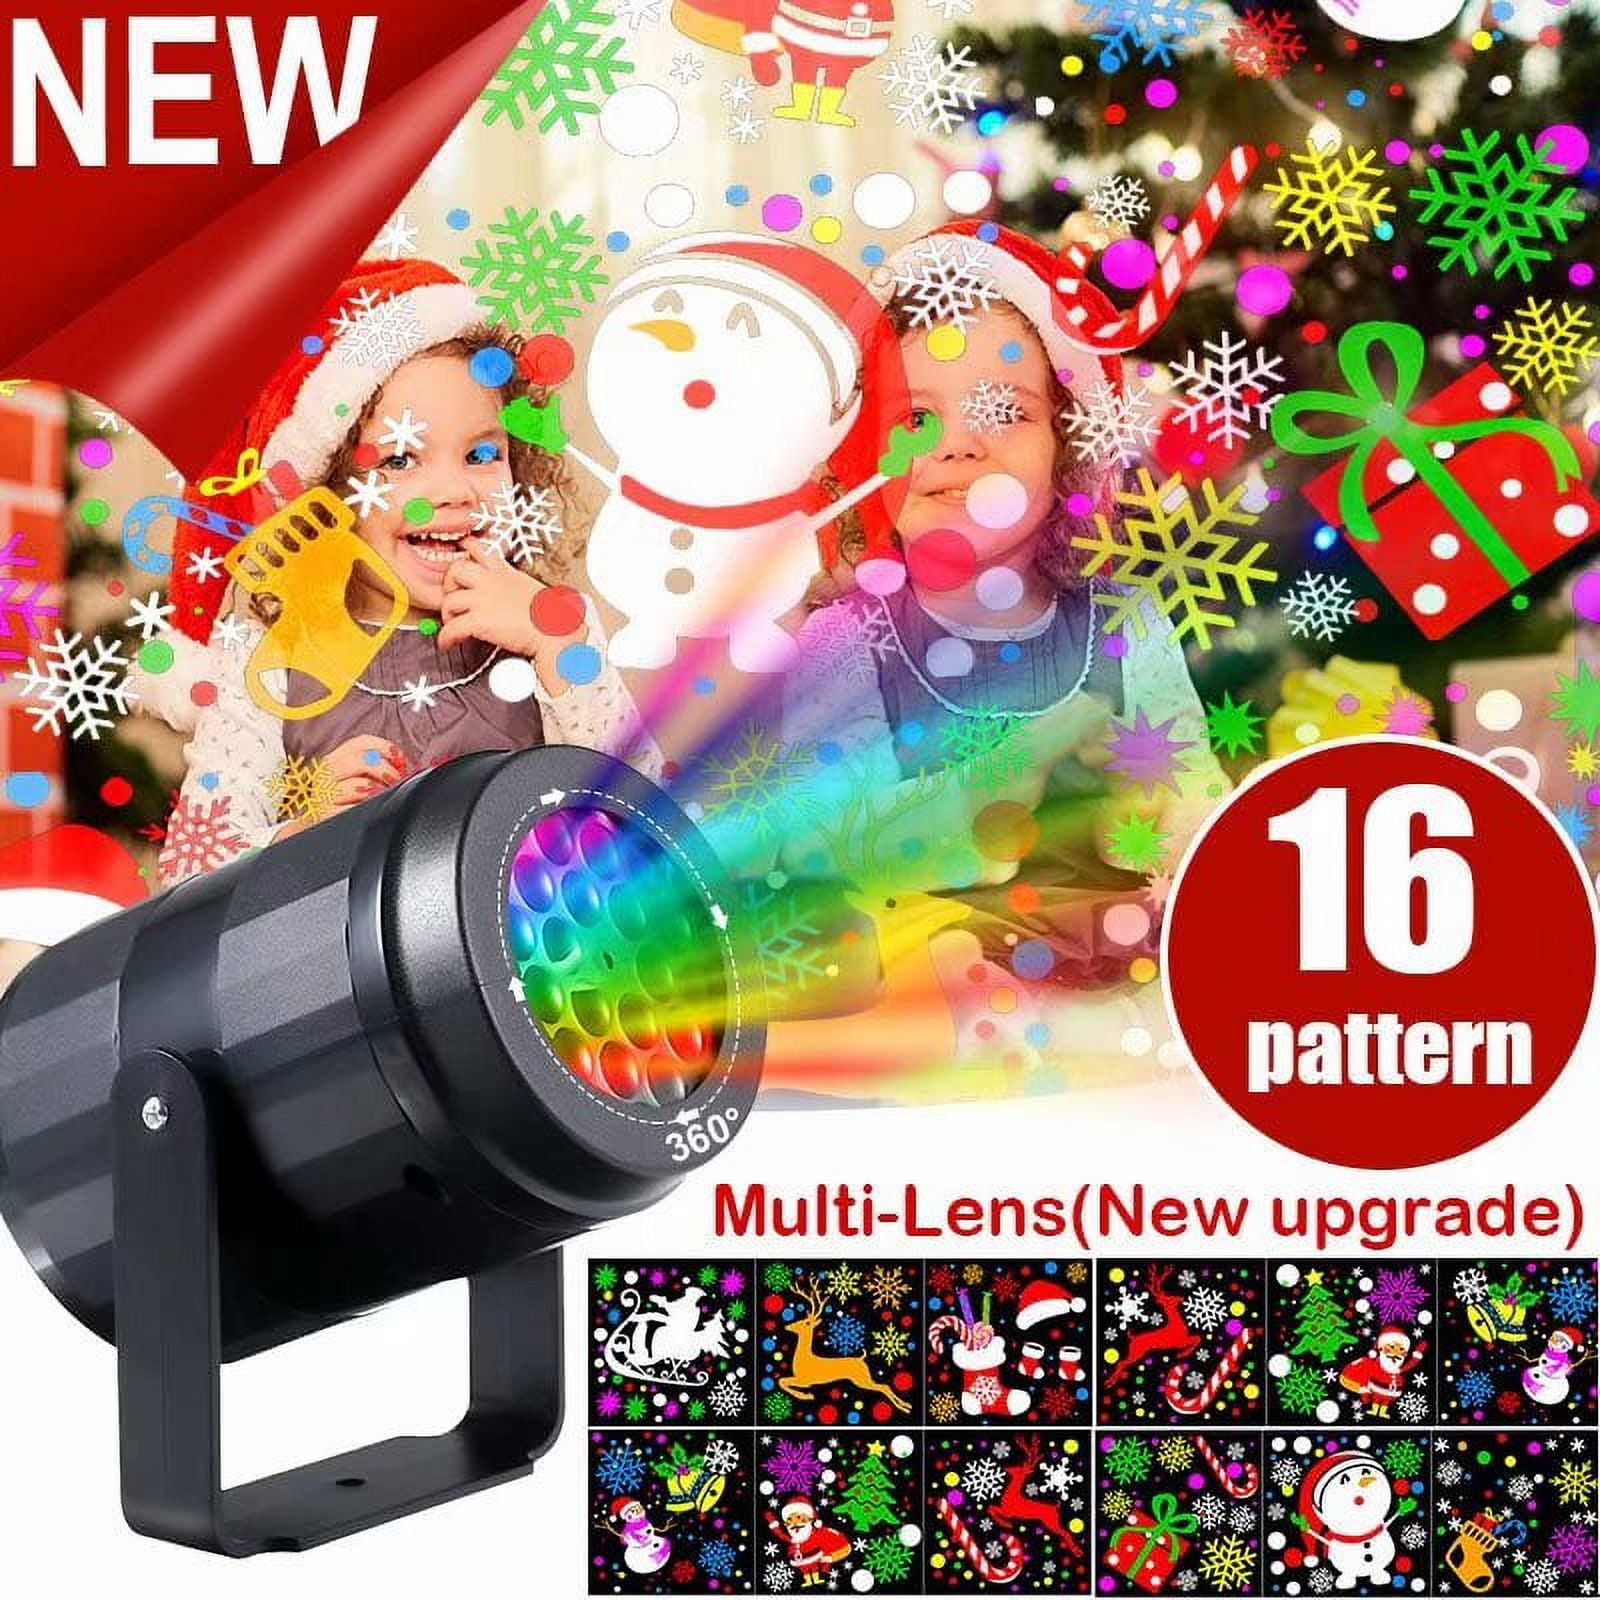 Vtin Outdoor Christmas LED Projection Light 16 Patterns Laser